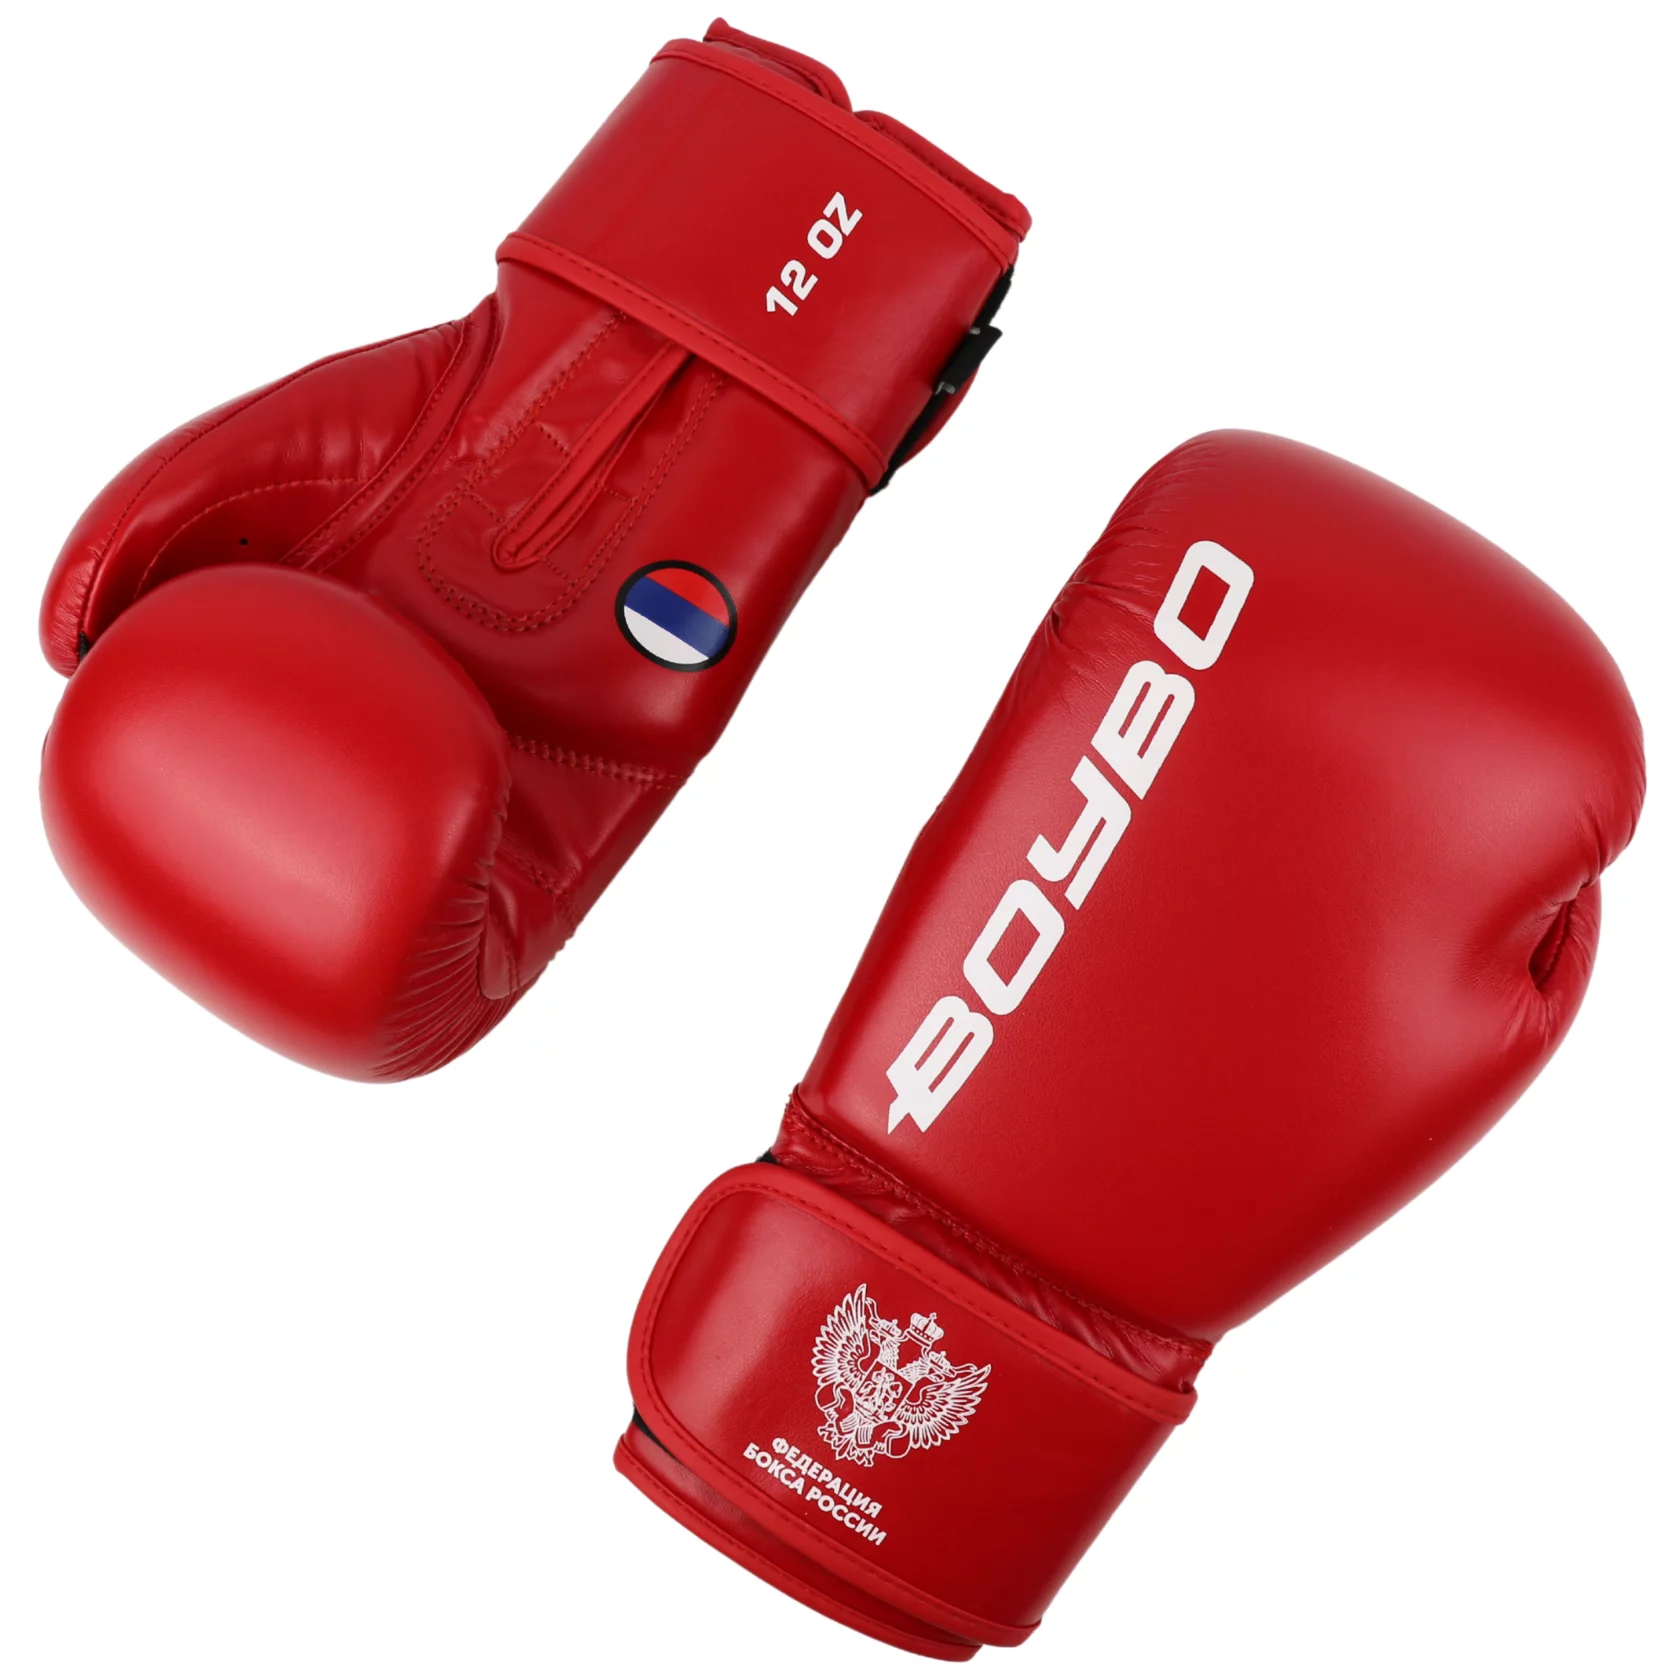 Фото Перчатки боксерские BoyBo Titan кожа, одобрены ФРБ, красные IB-23-1 со склада магазина СпортЕВ